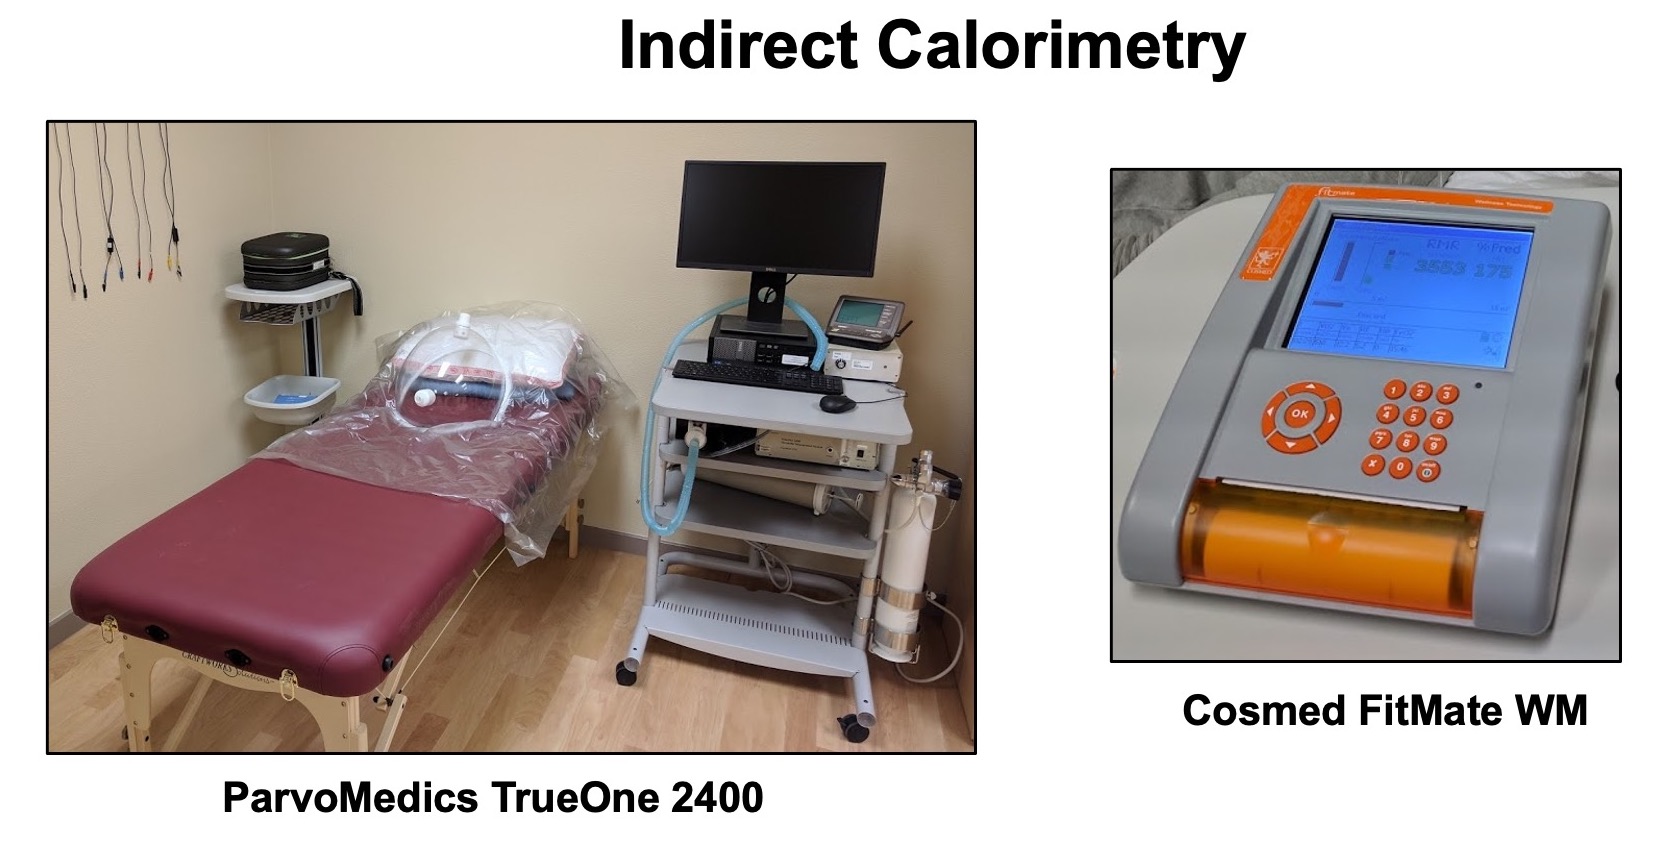 Indirect calorimetry